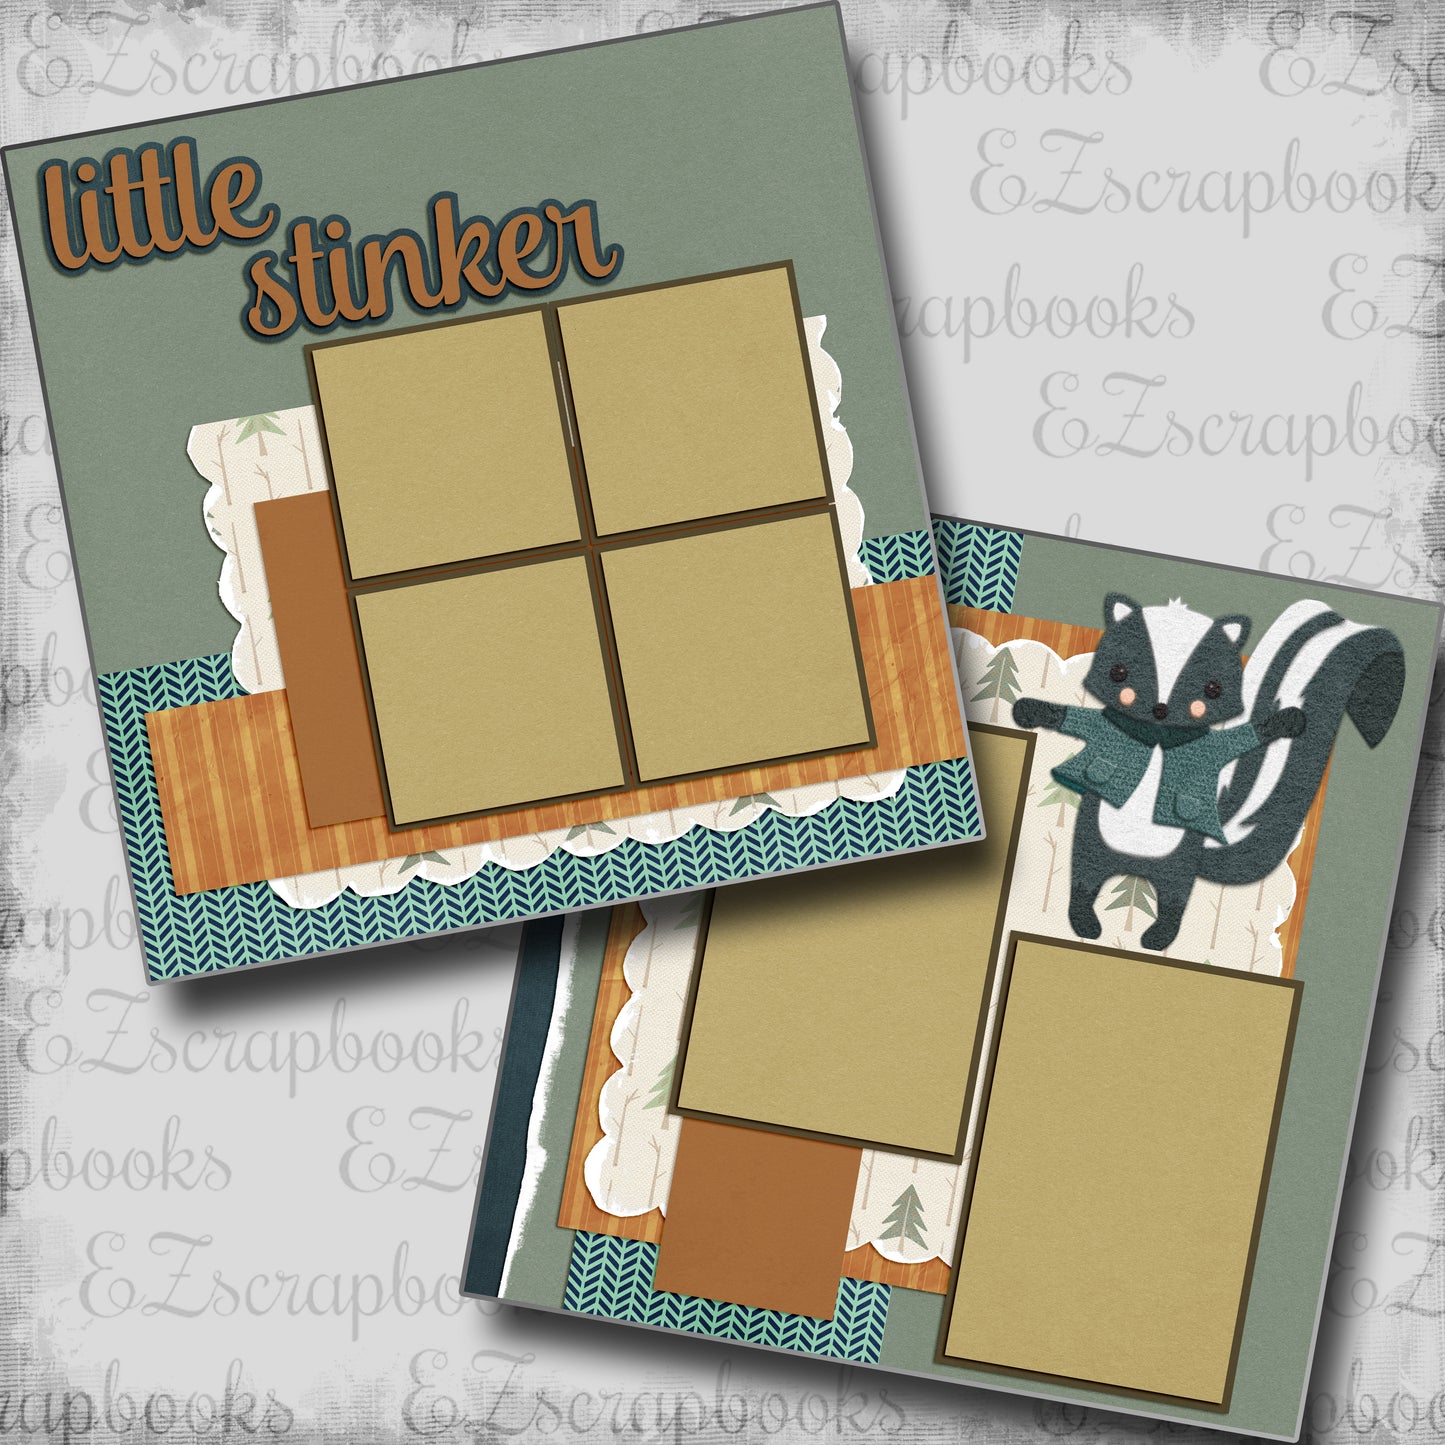 Little Stinker - 5672